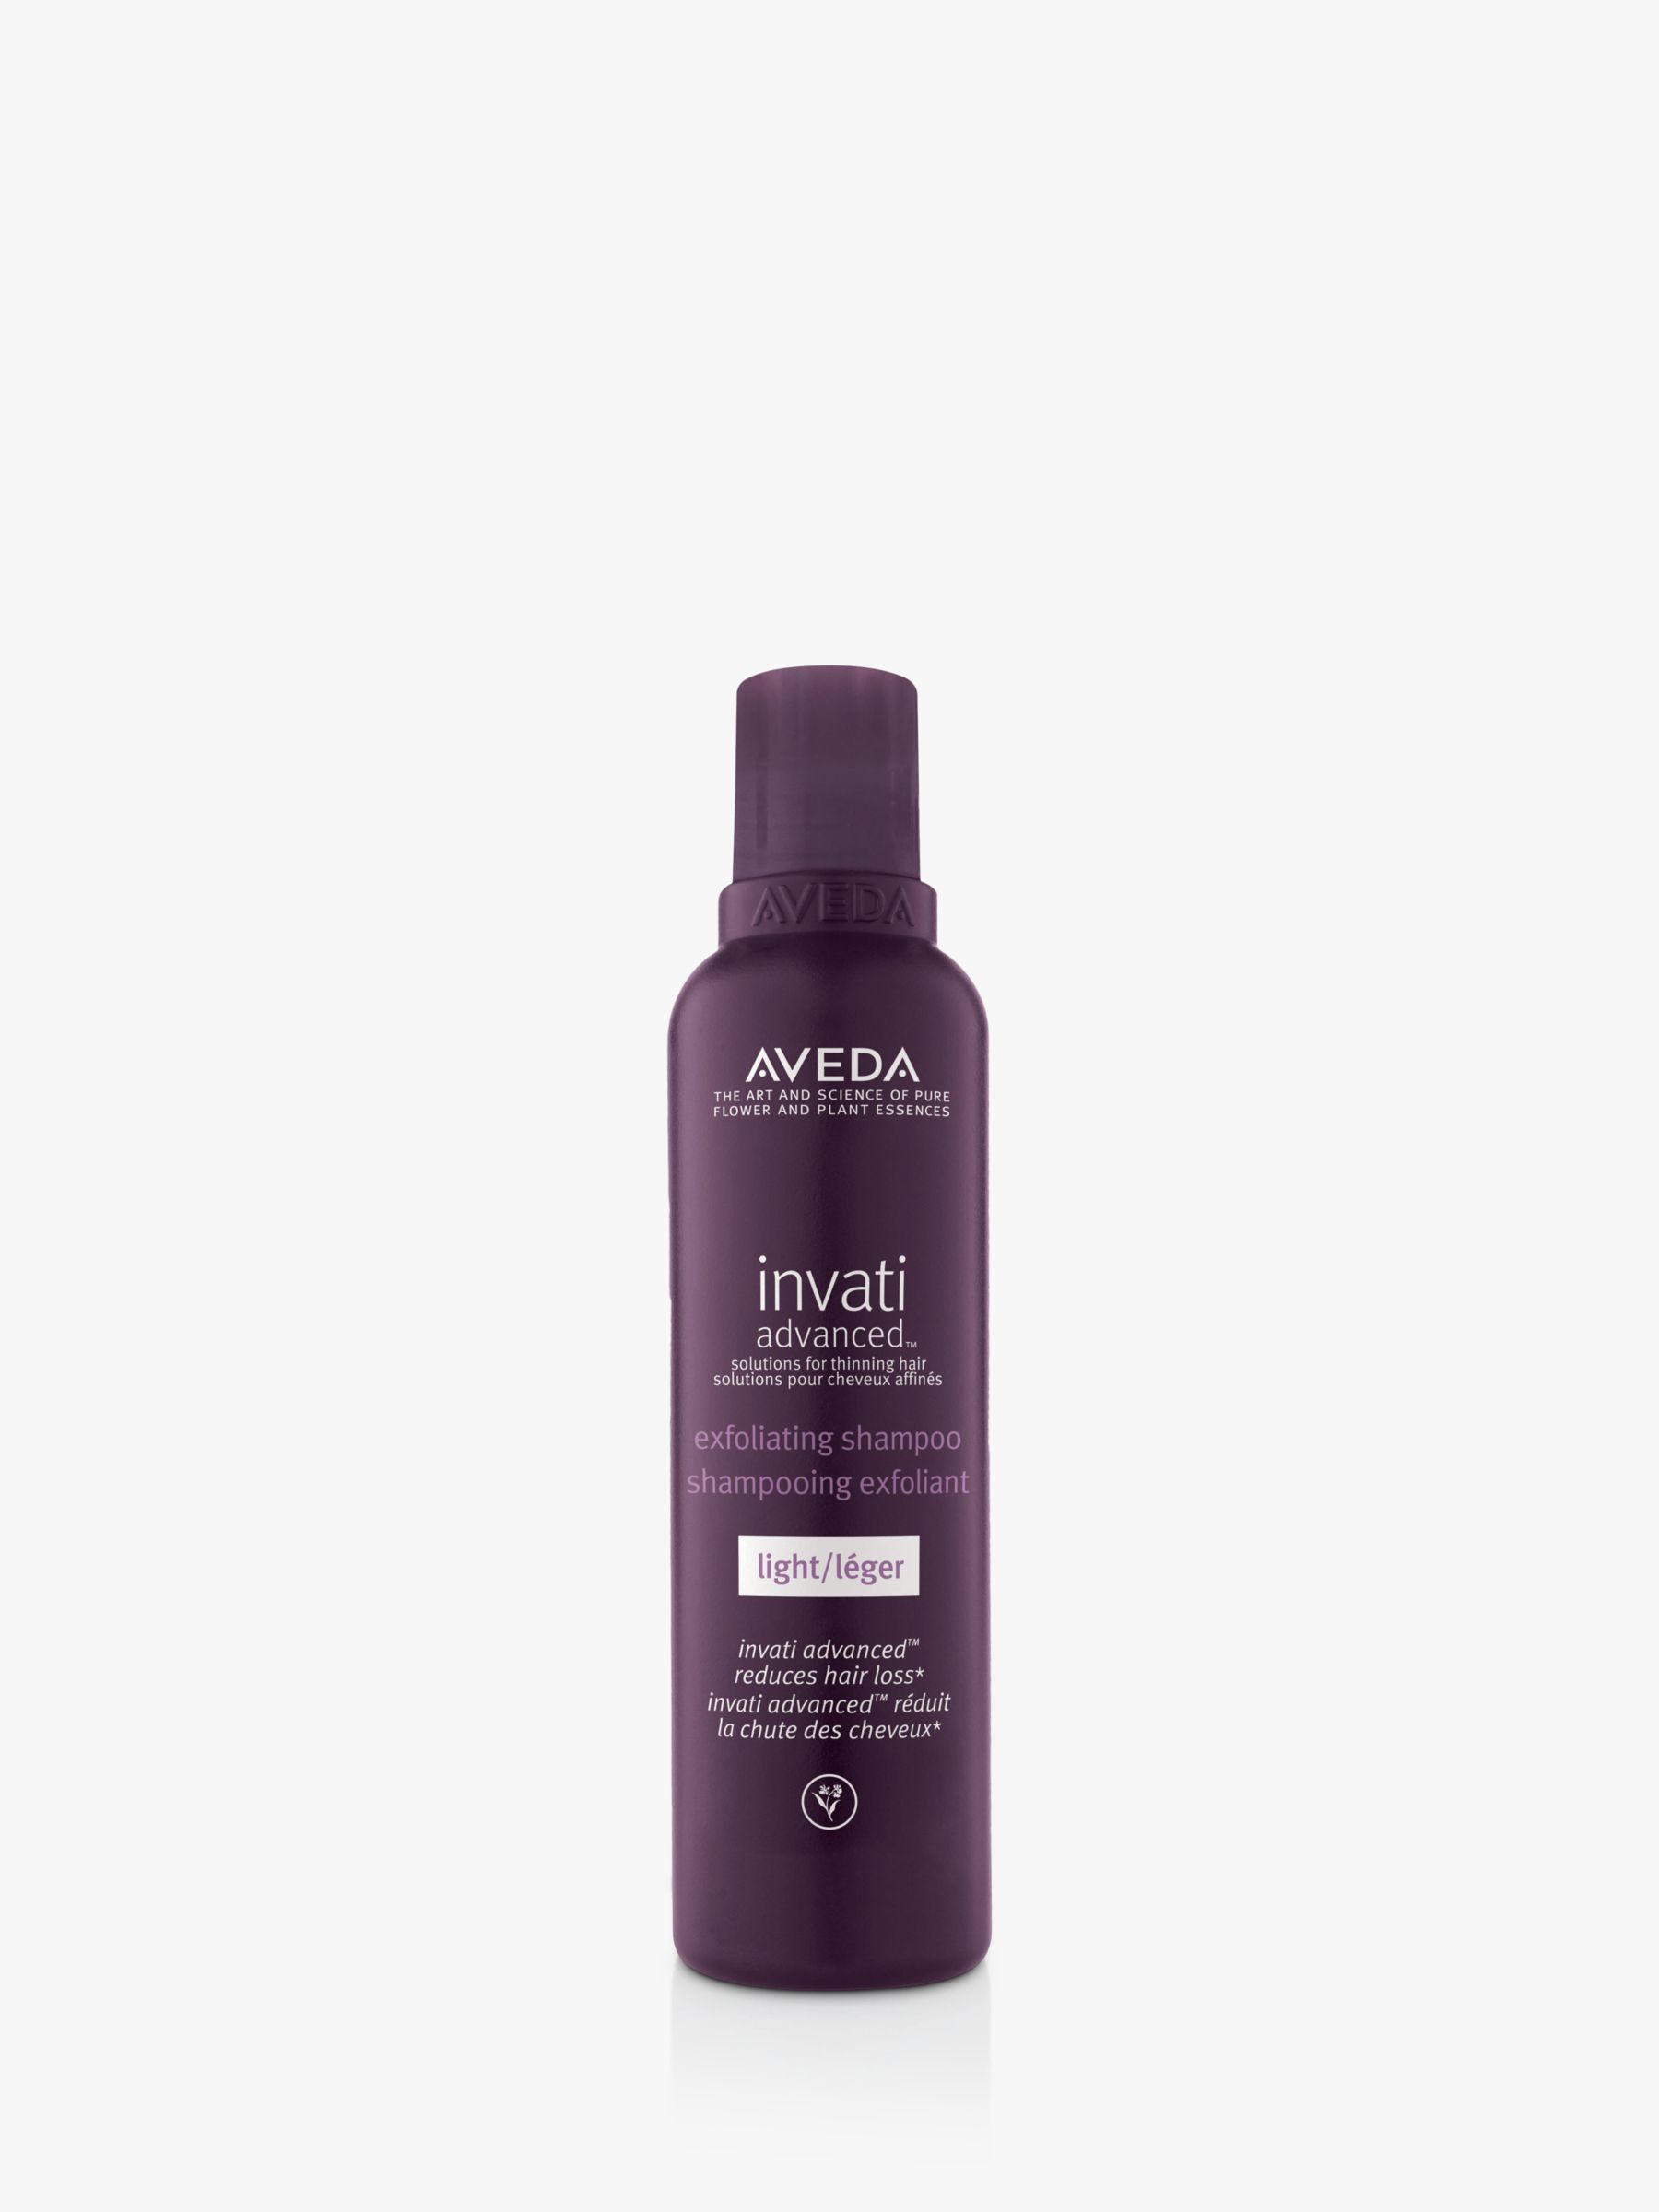 Aveda Invati Advanced™ Exfoliating Shampoo, Light, 200ml 1